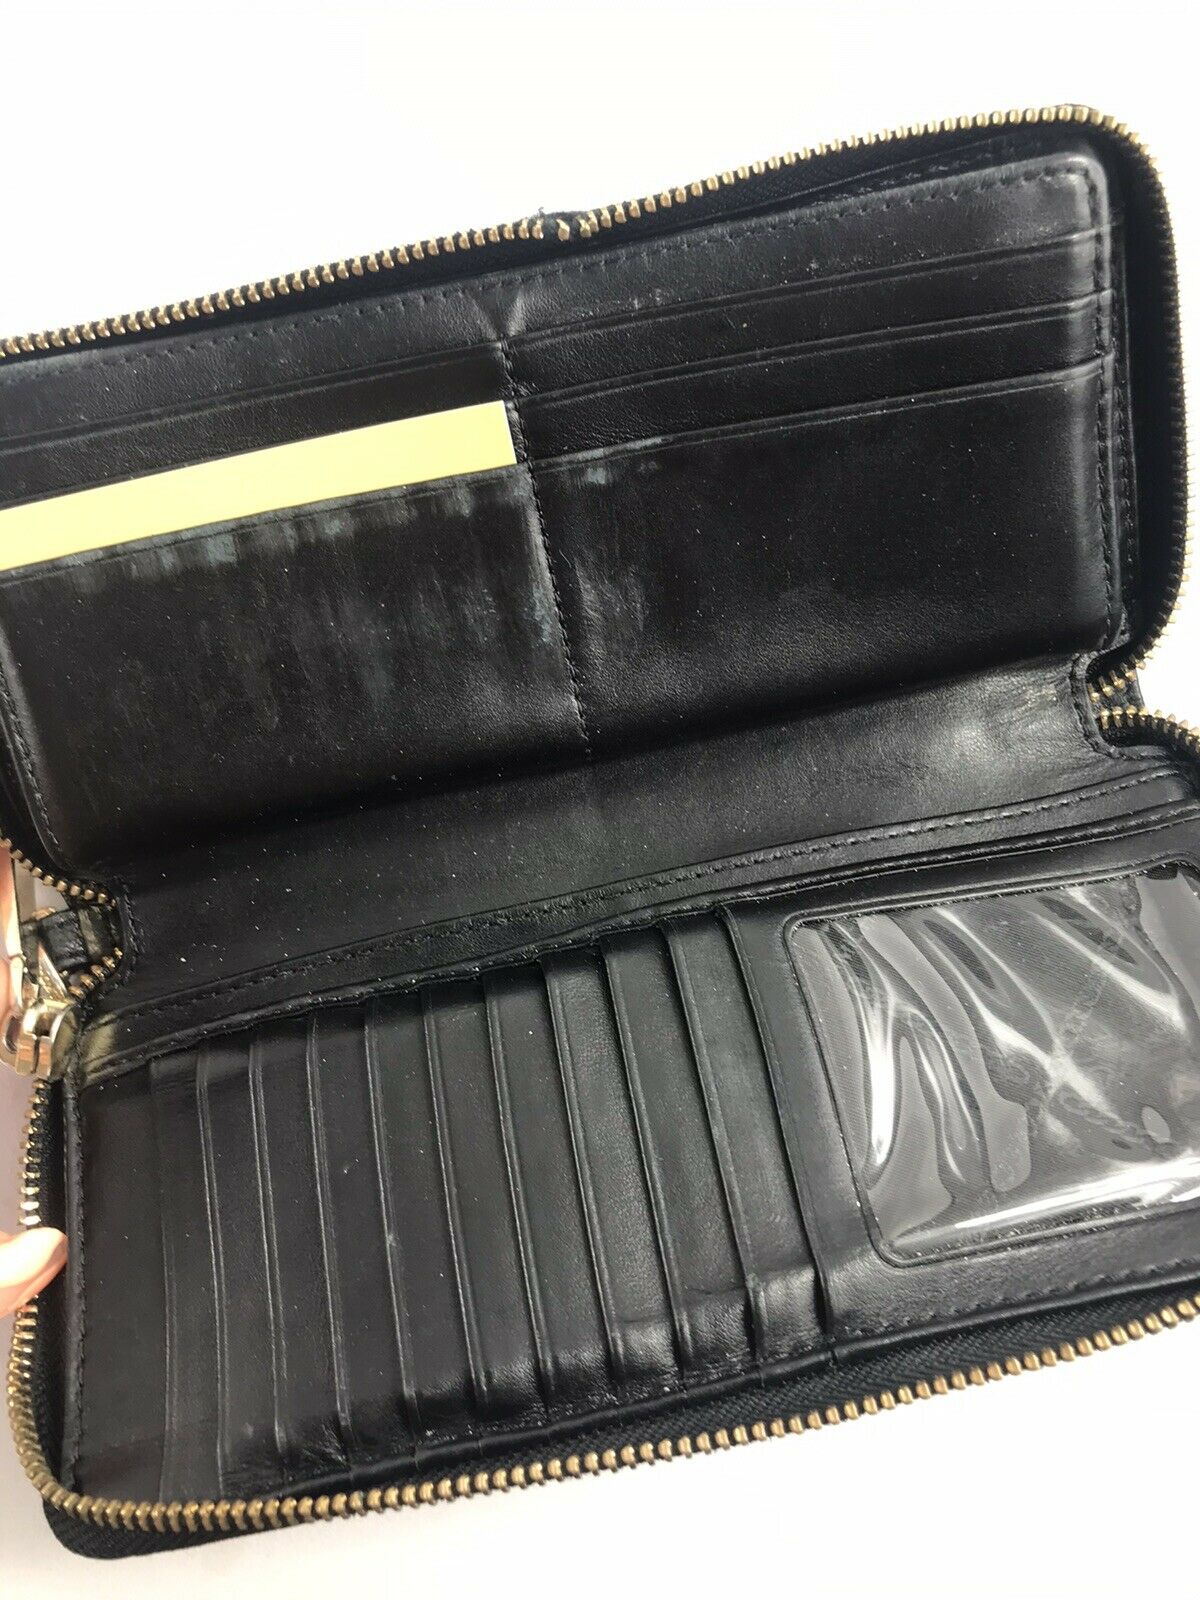 Michael Kors wallet zipper broke ($20)